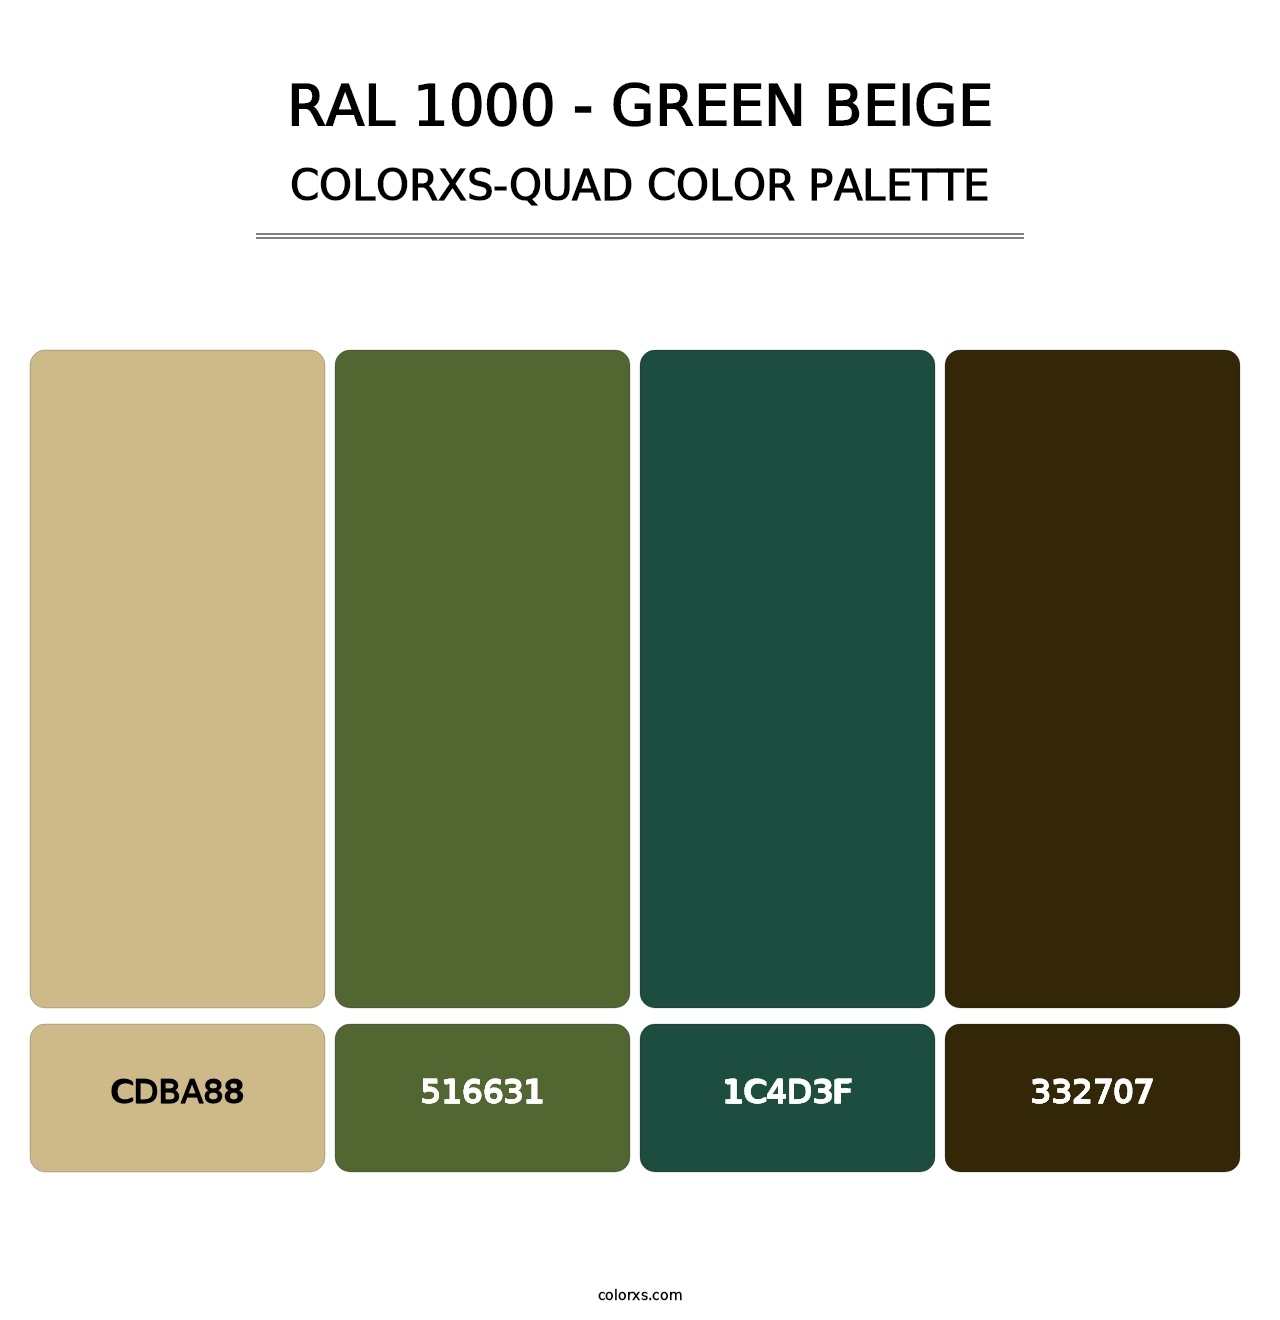 RAL 1000 - Green Beige - Colorxs Quad Palette